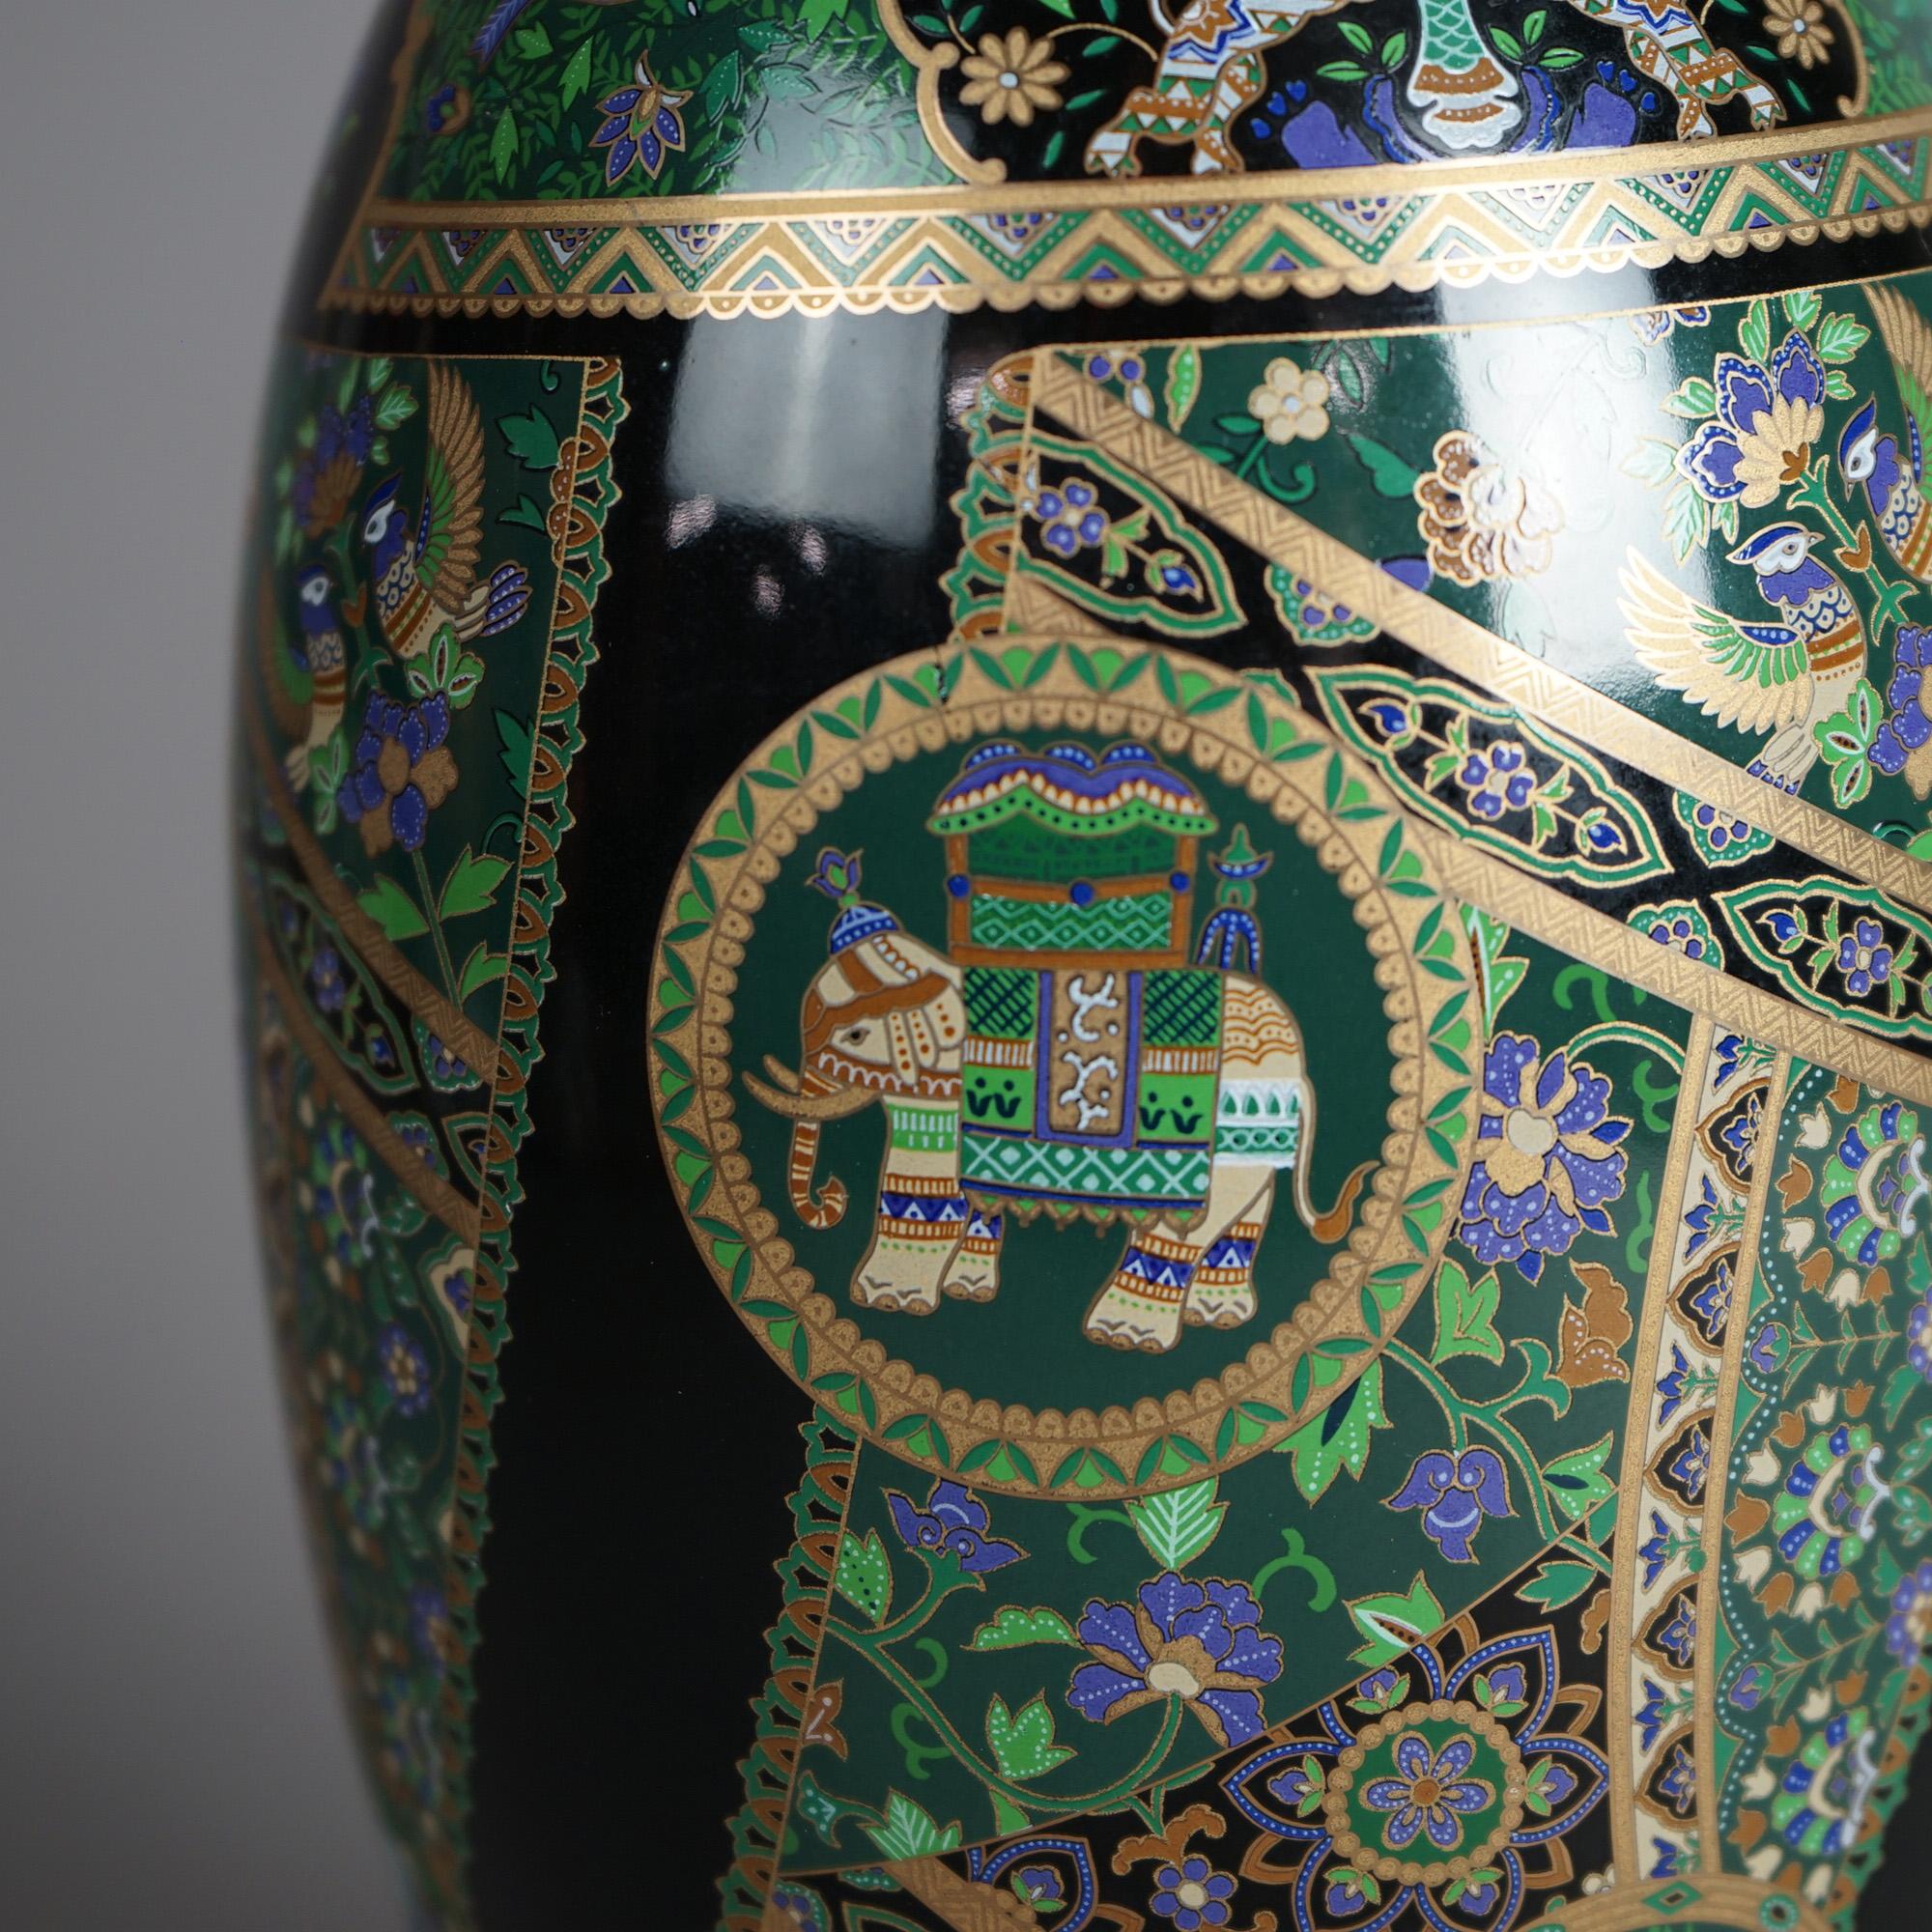 Japanese Porcelain Vase, Garden Scene with Animals, by Jamaji 20th C For Sale 1